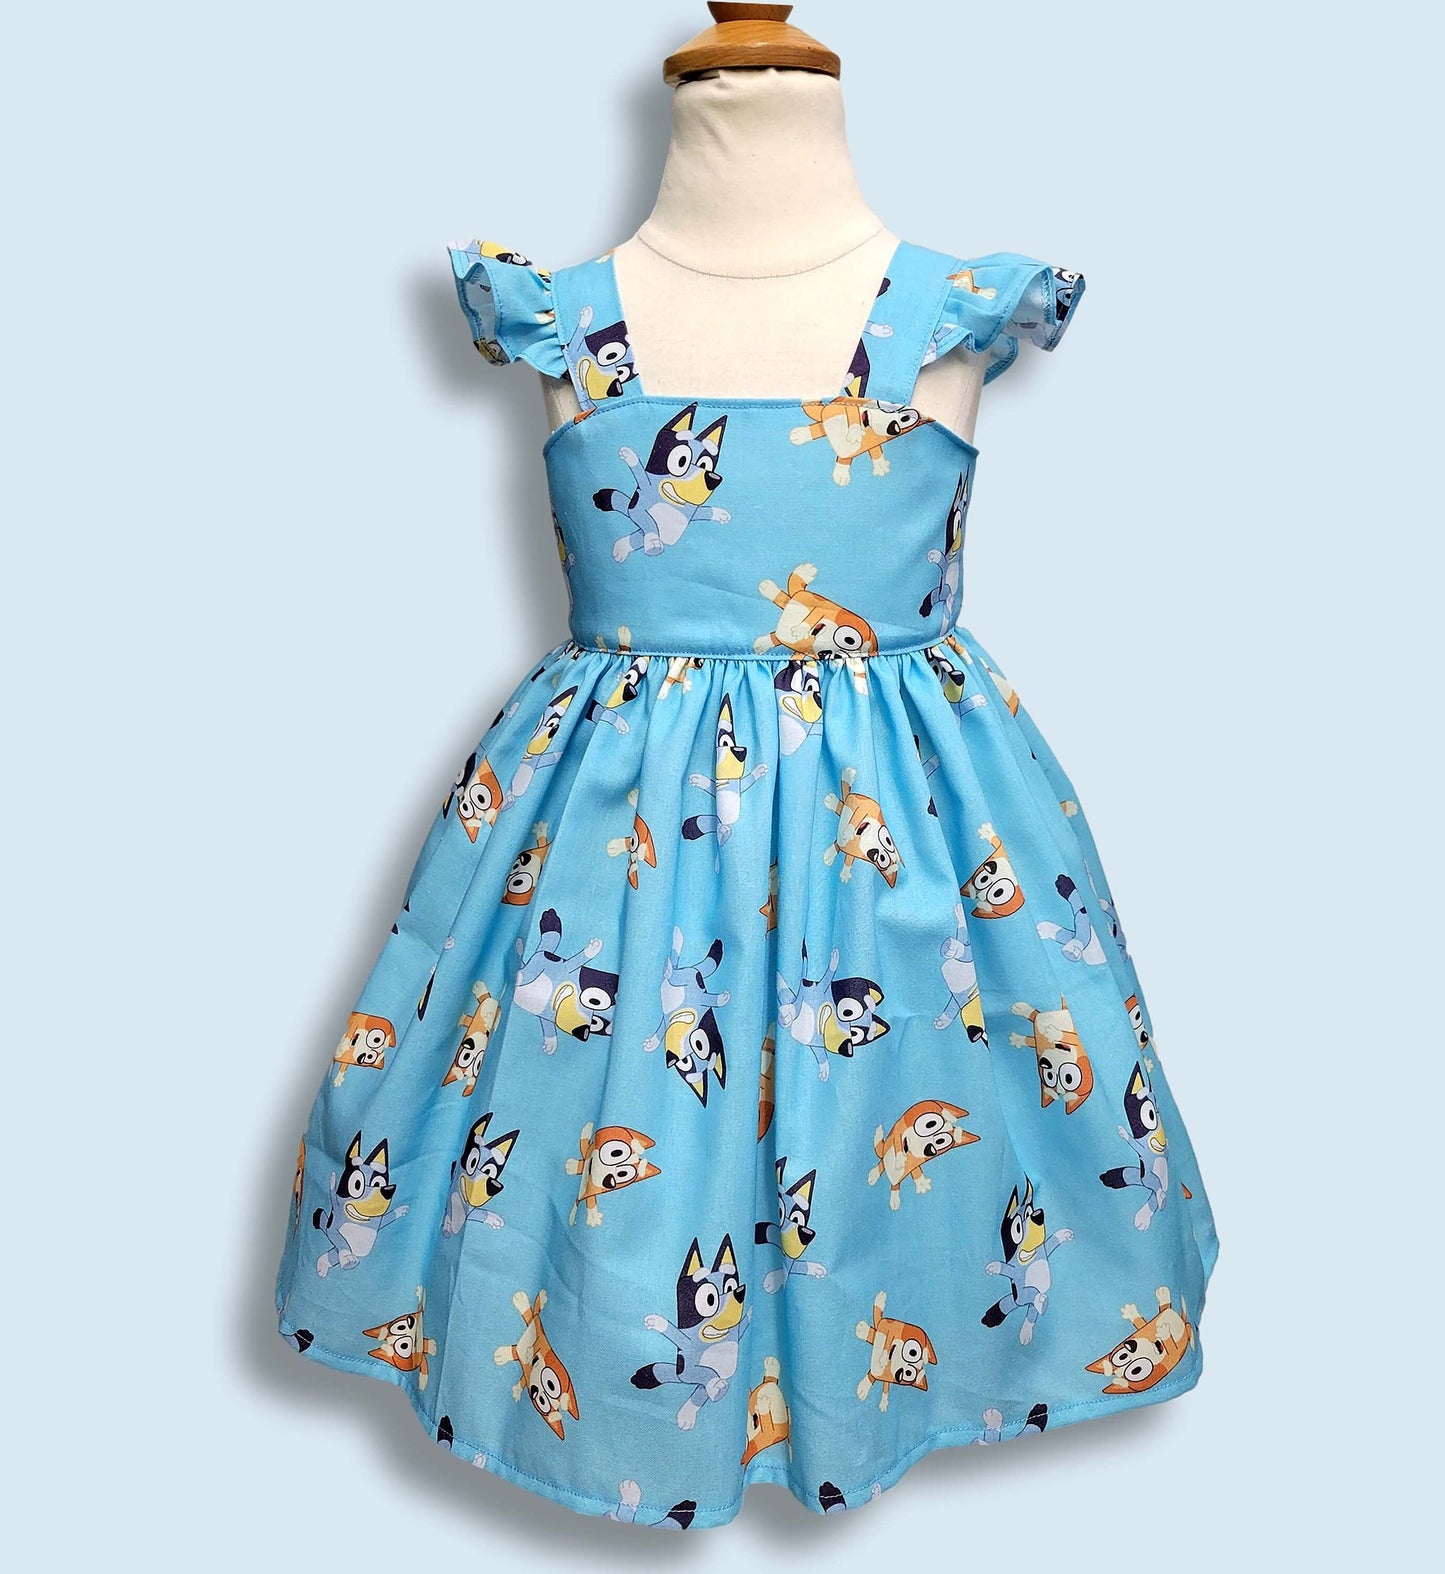 Blue dog inspired dress,  Birthday carton girls dress, Toddler blue dress, Dog birthday outfit